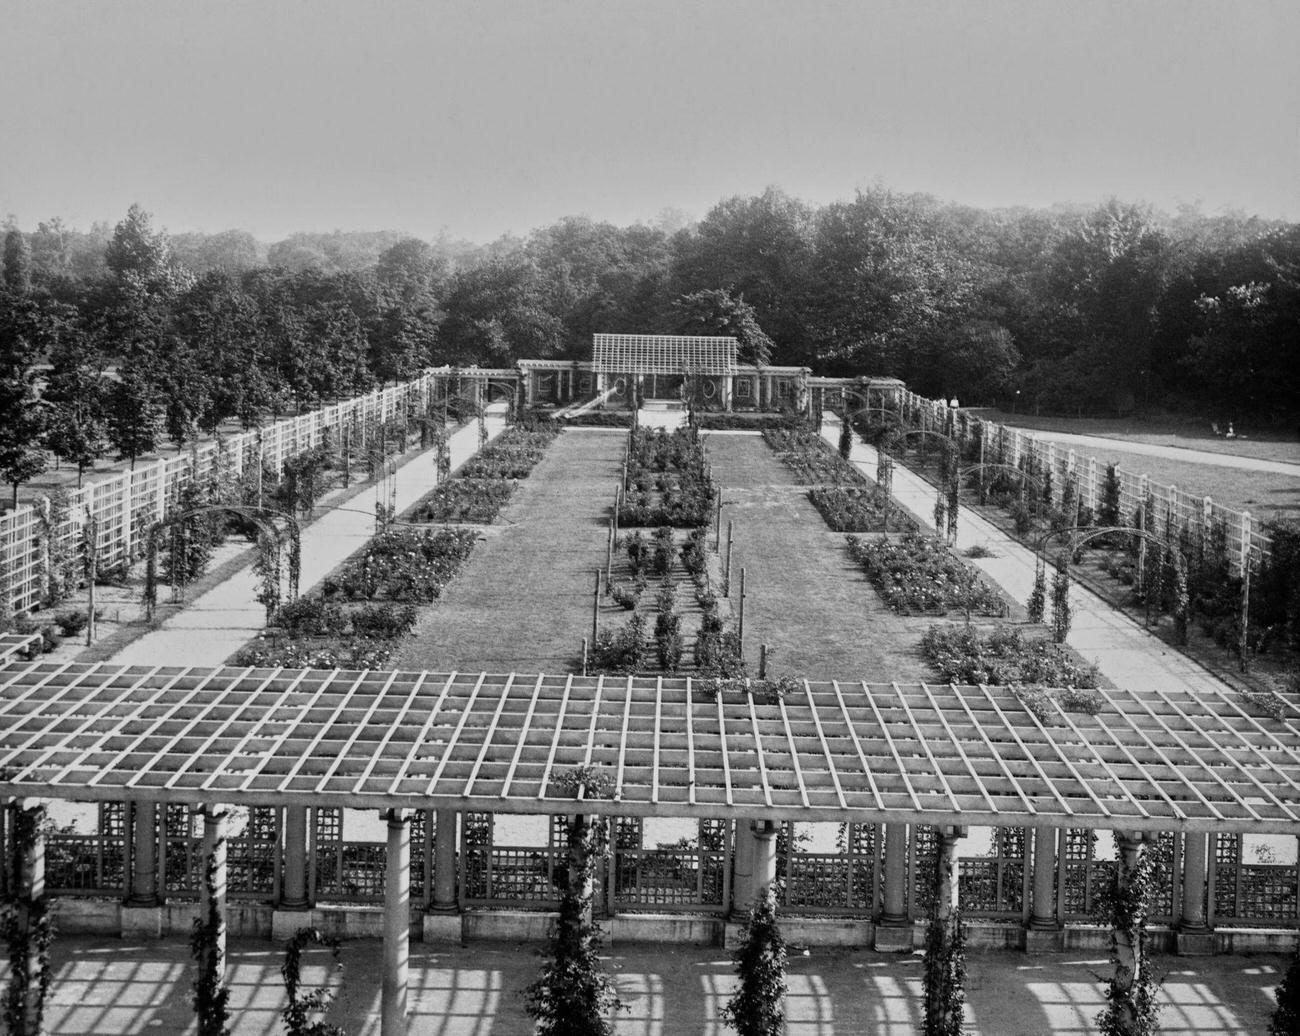 Cranford Rose Garden In Brooklyn Botanic Garden Surrounded By Wooden Trellis Panels, Brooklyn, Circa 1935.